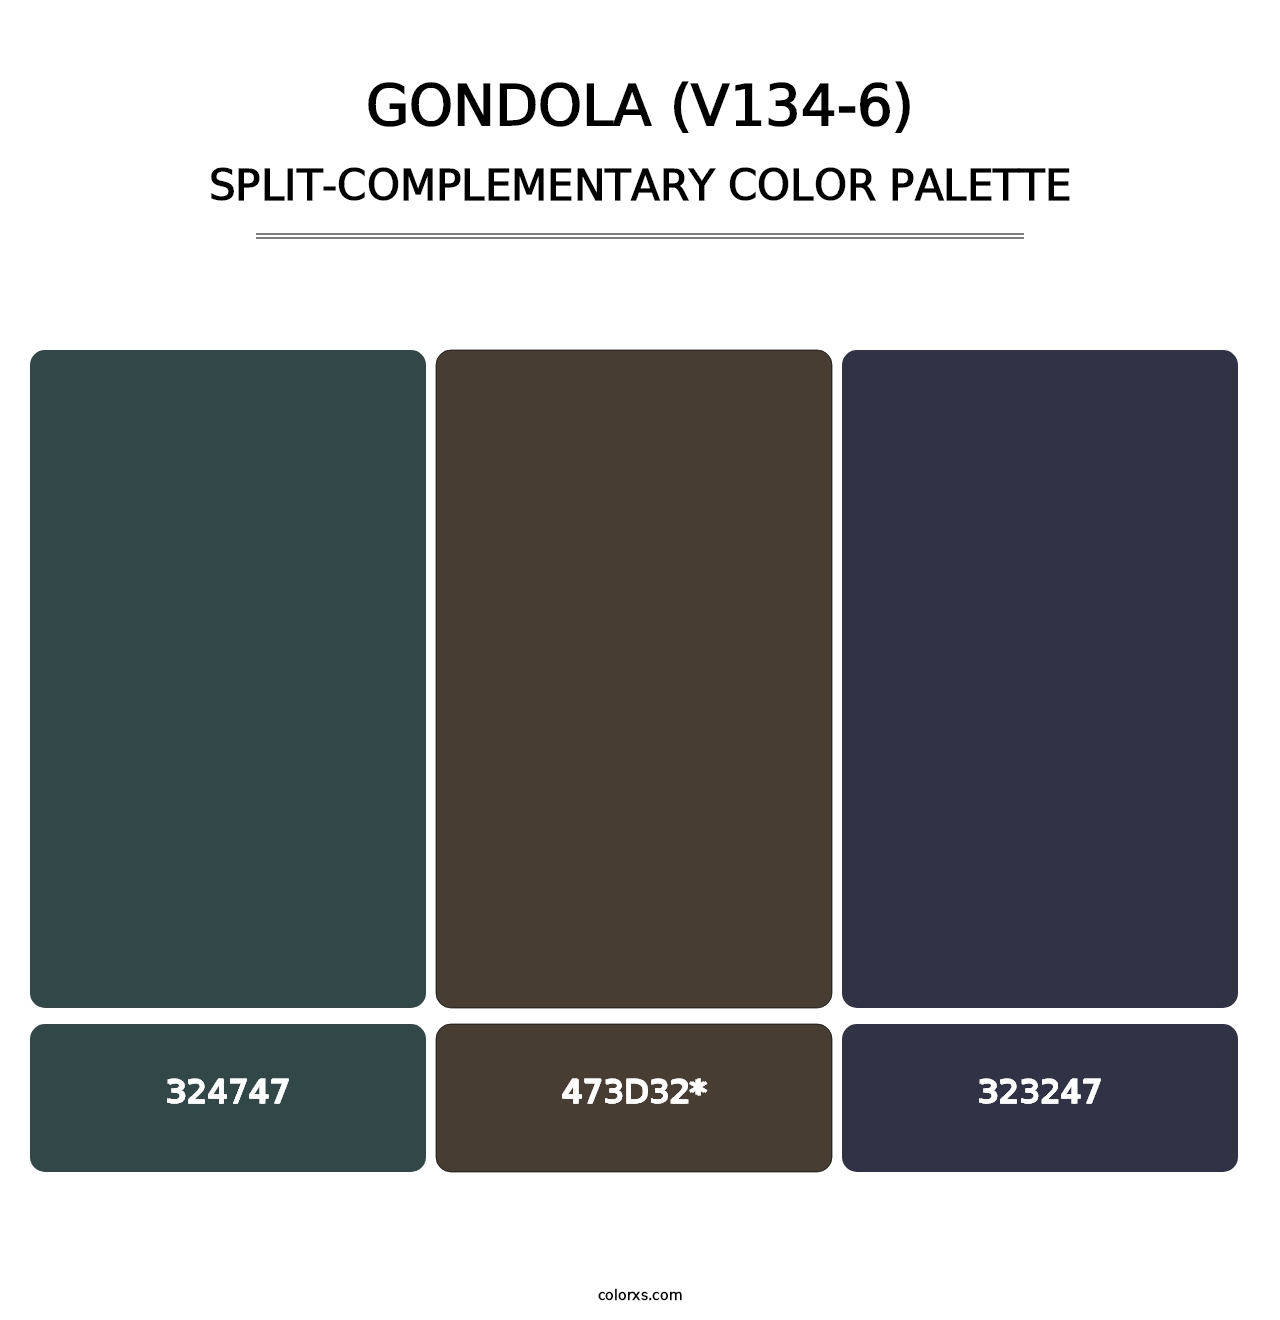 Gondola (V134-6) - Split-Complementary Color Palette